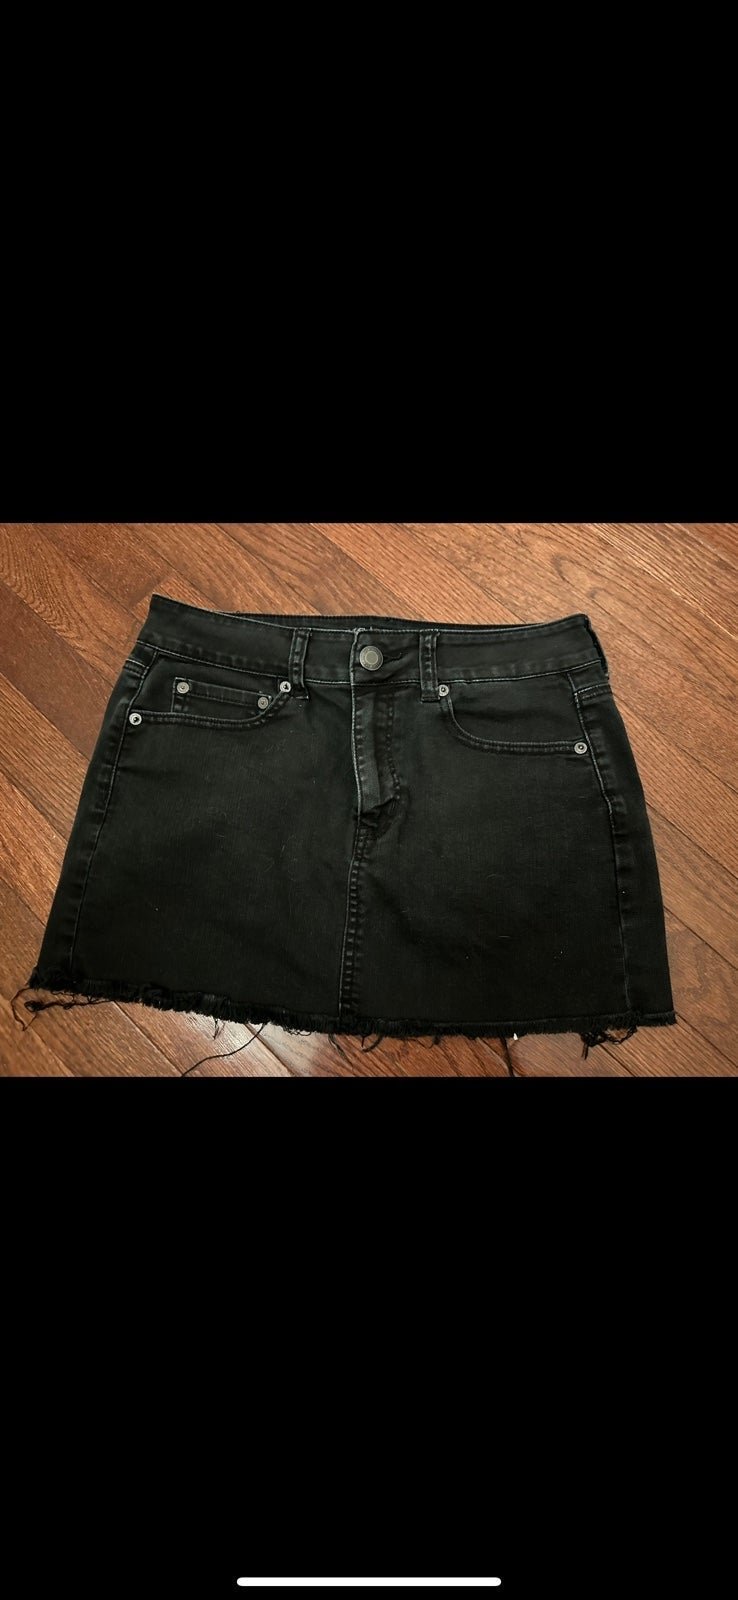 Latest  American Eagle jean skirt size 6 black HtnjTn7N